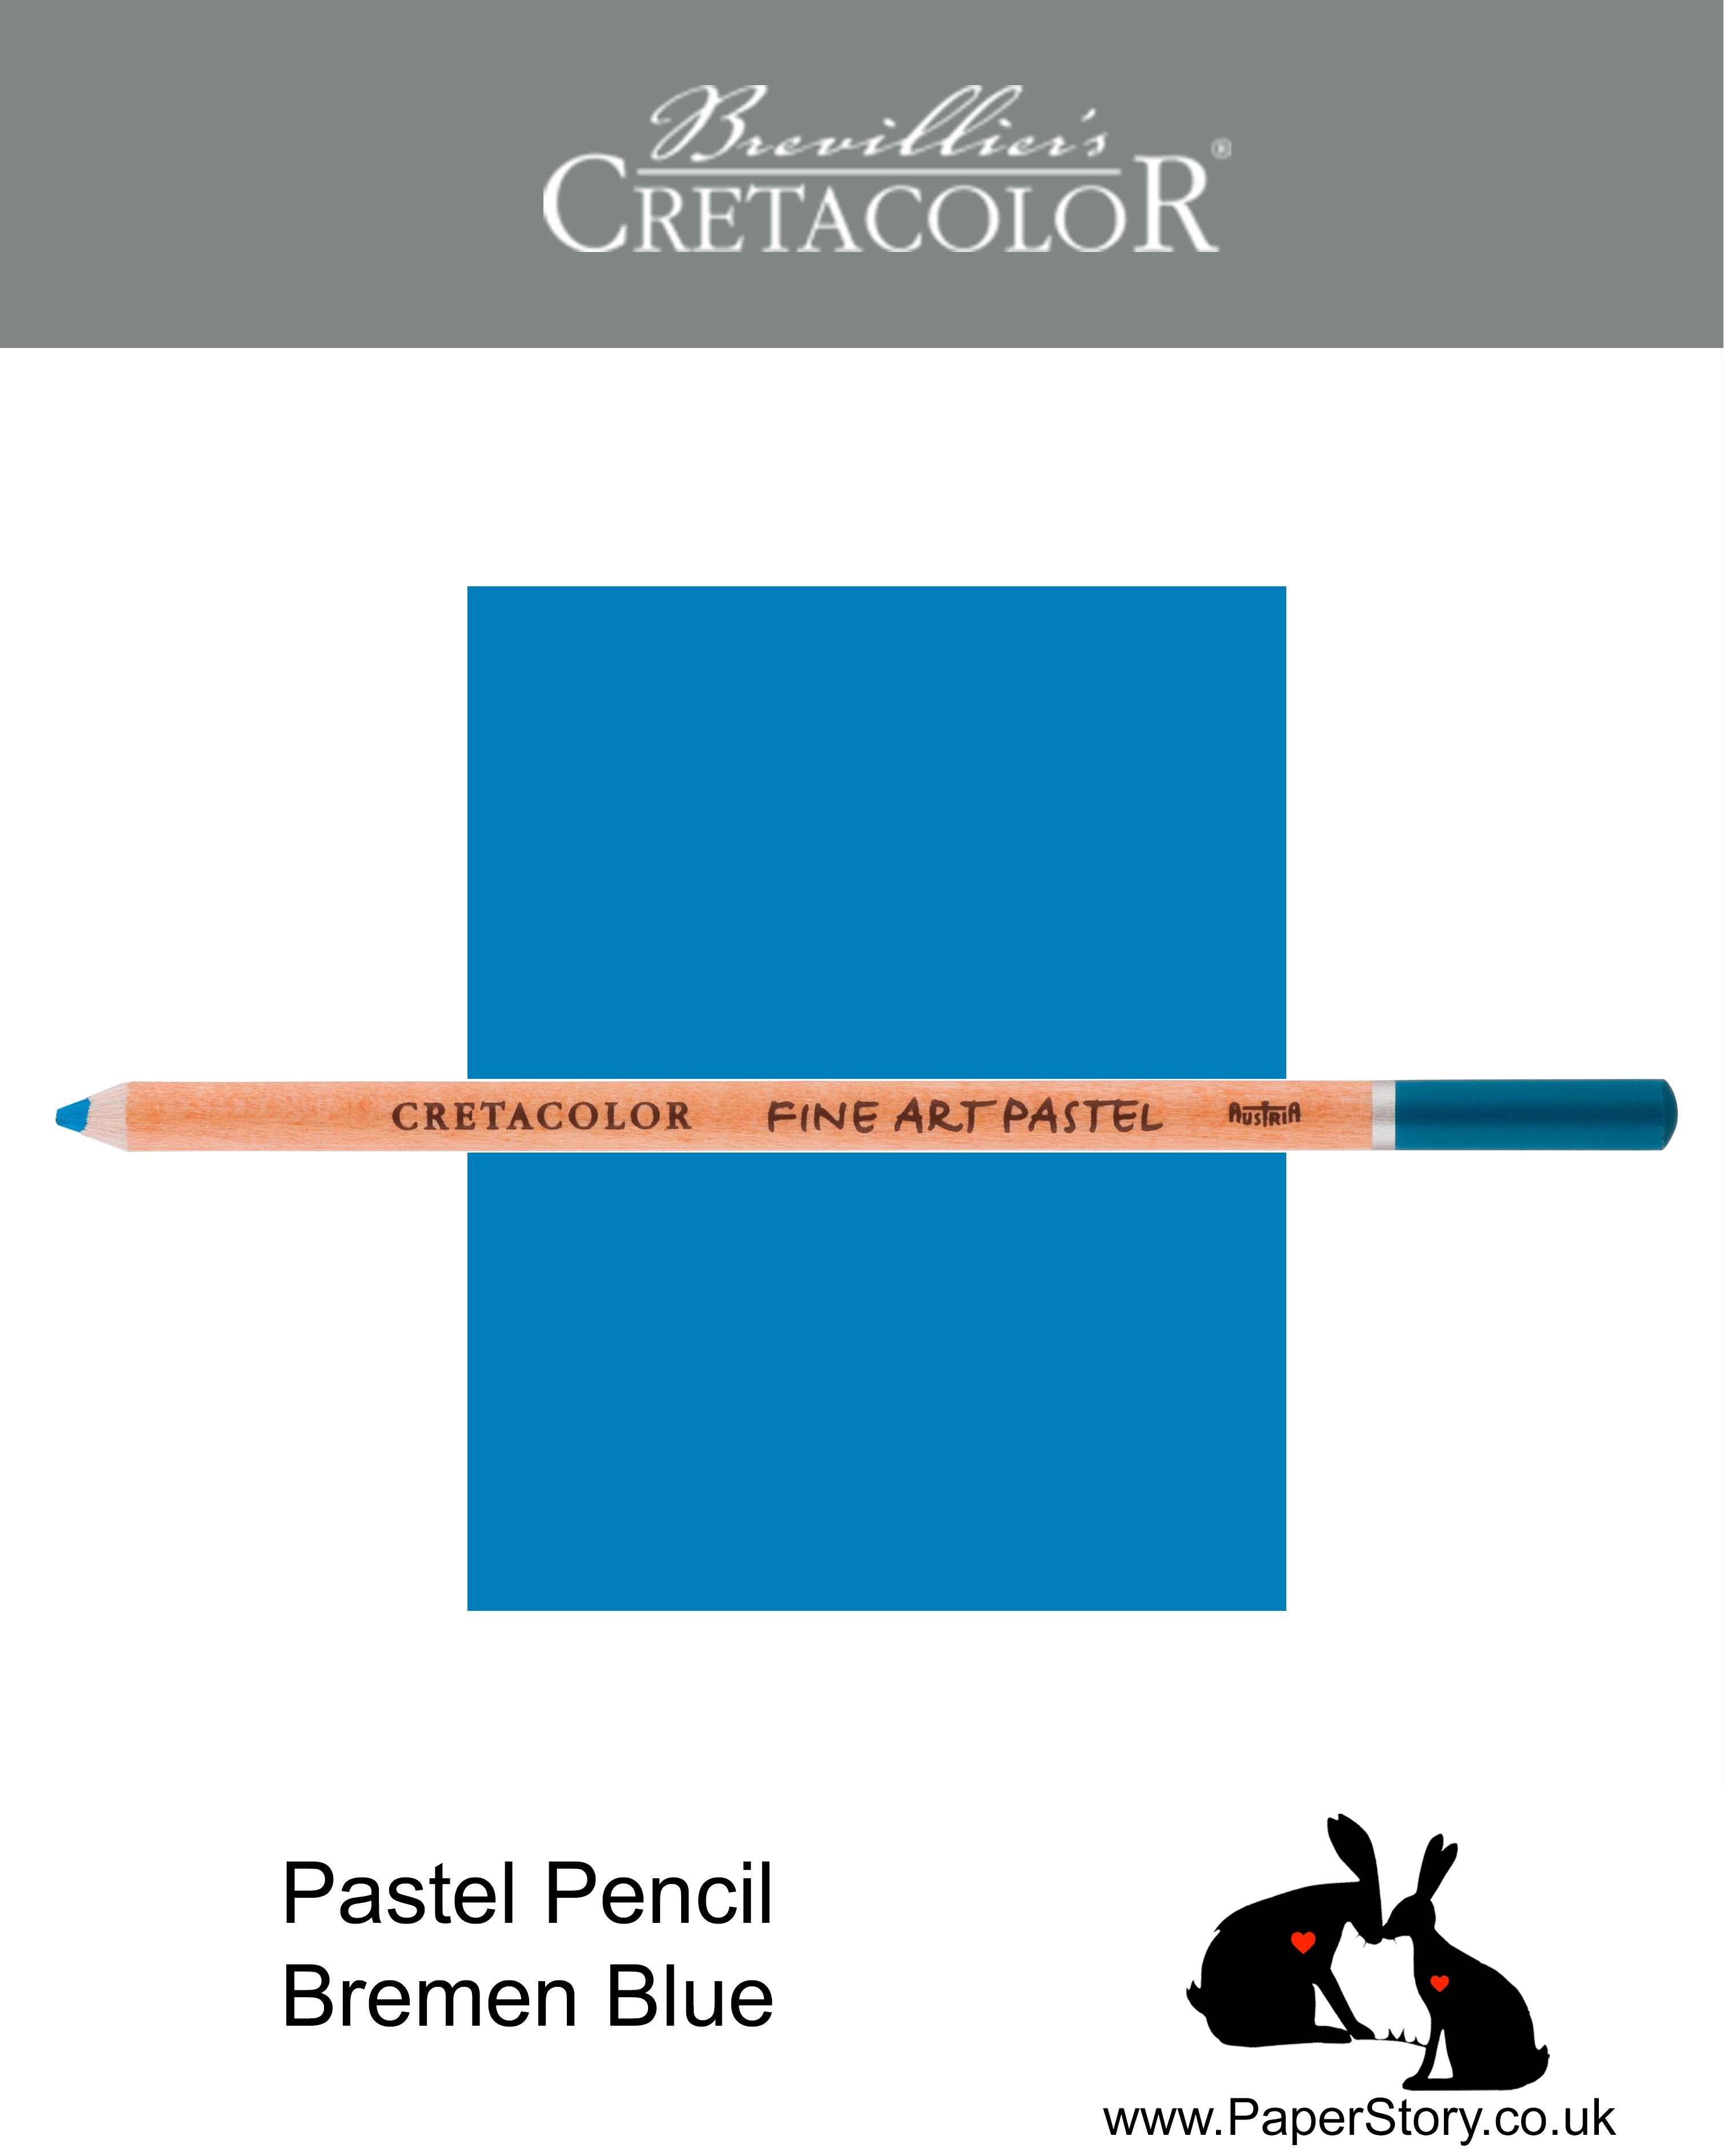 Cretacolor 471 63 Artists Pastel Pencil Bremen Blue